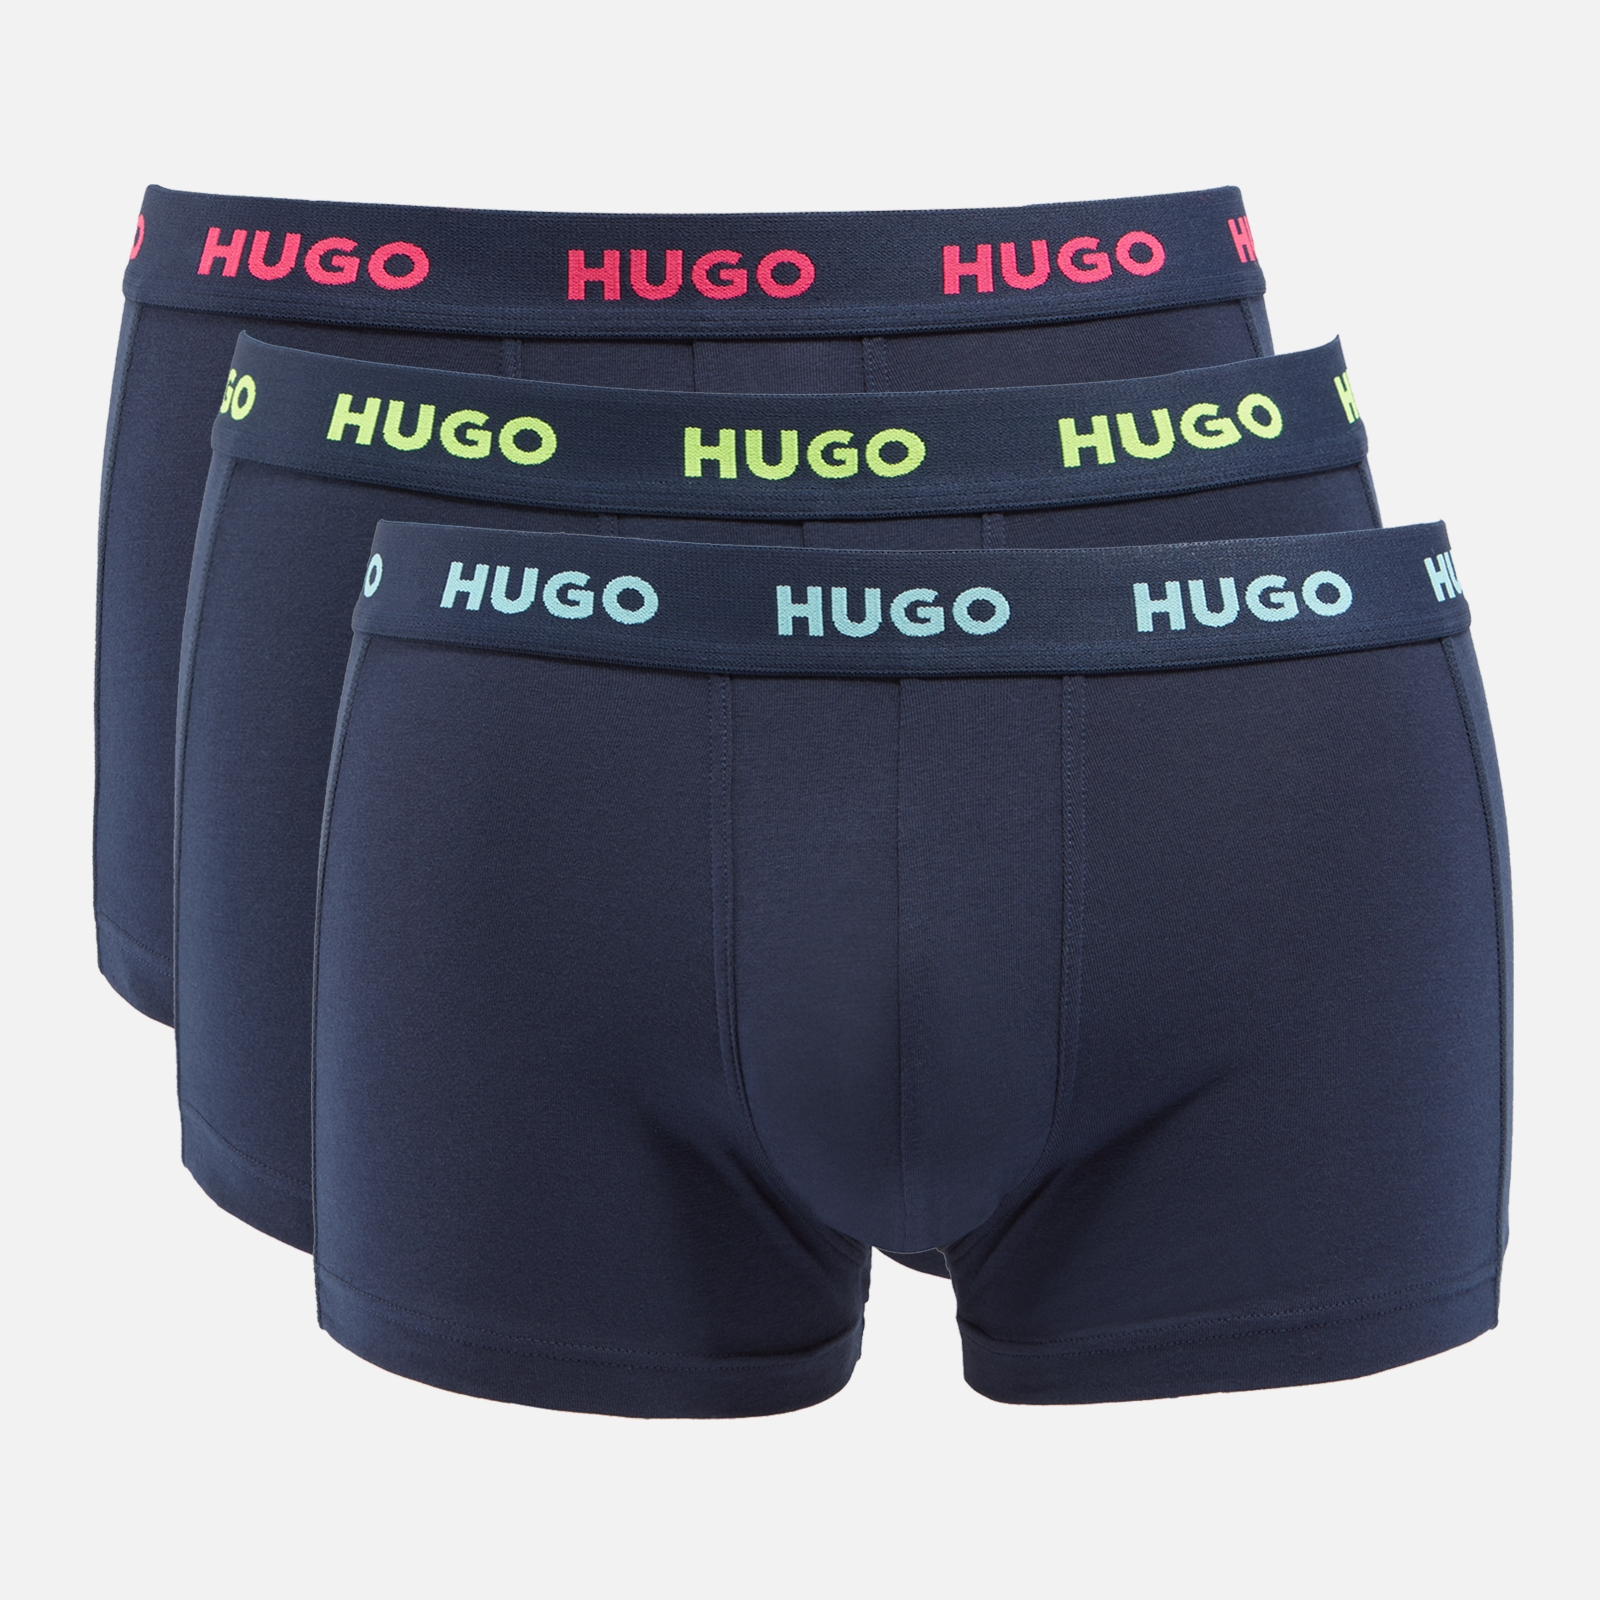 HUGO Bodywear Cotton-Blend Jersey 3-Pack Boxer Trunks